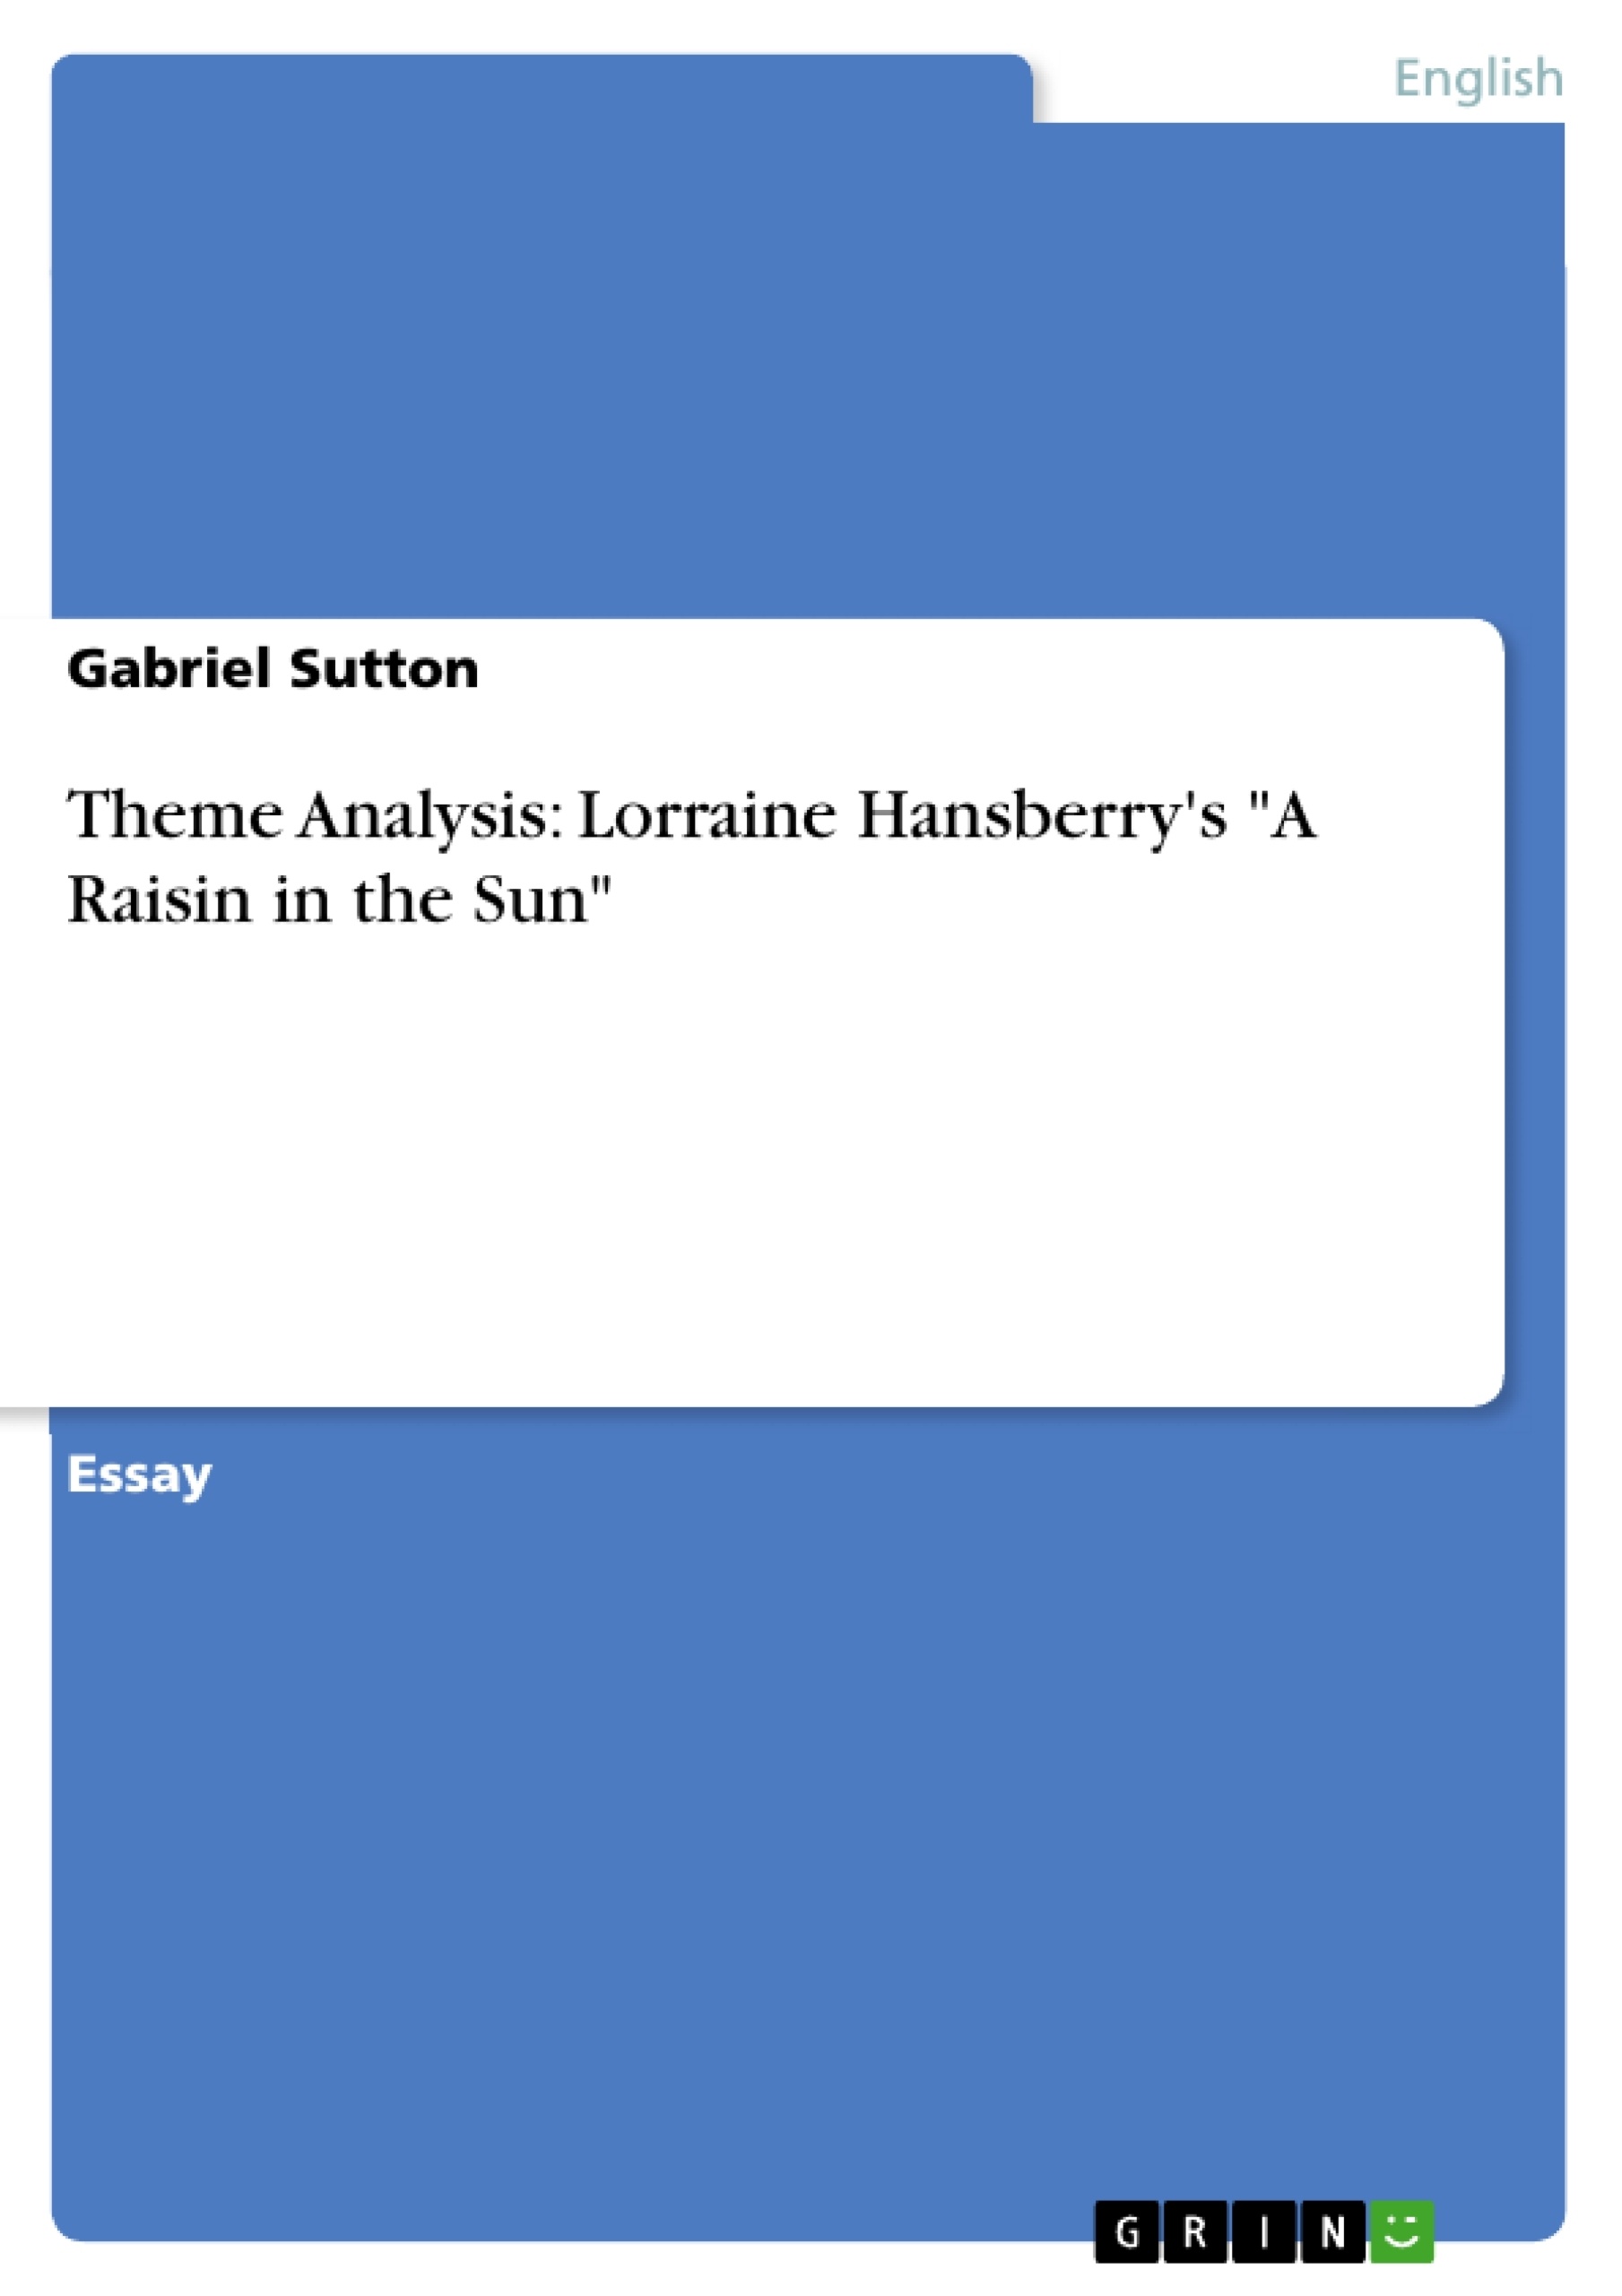 A raisin in the sun essays